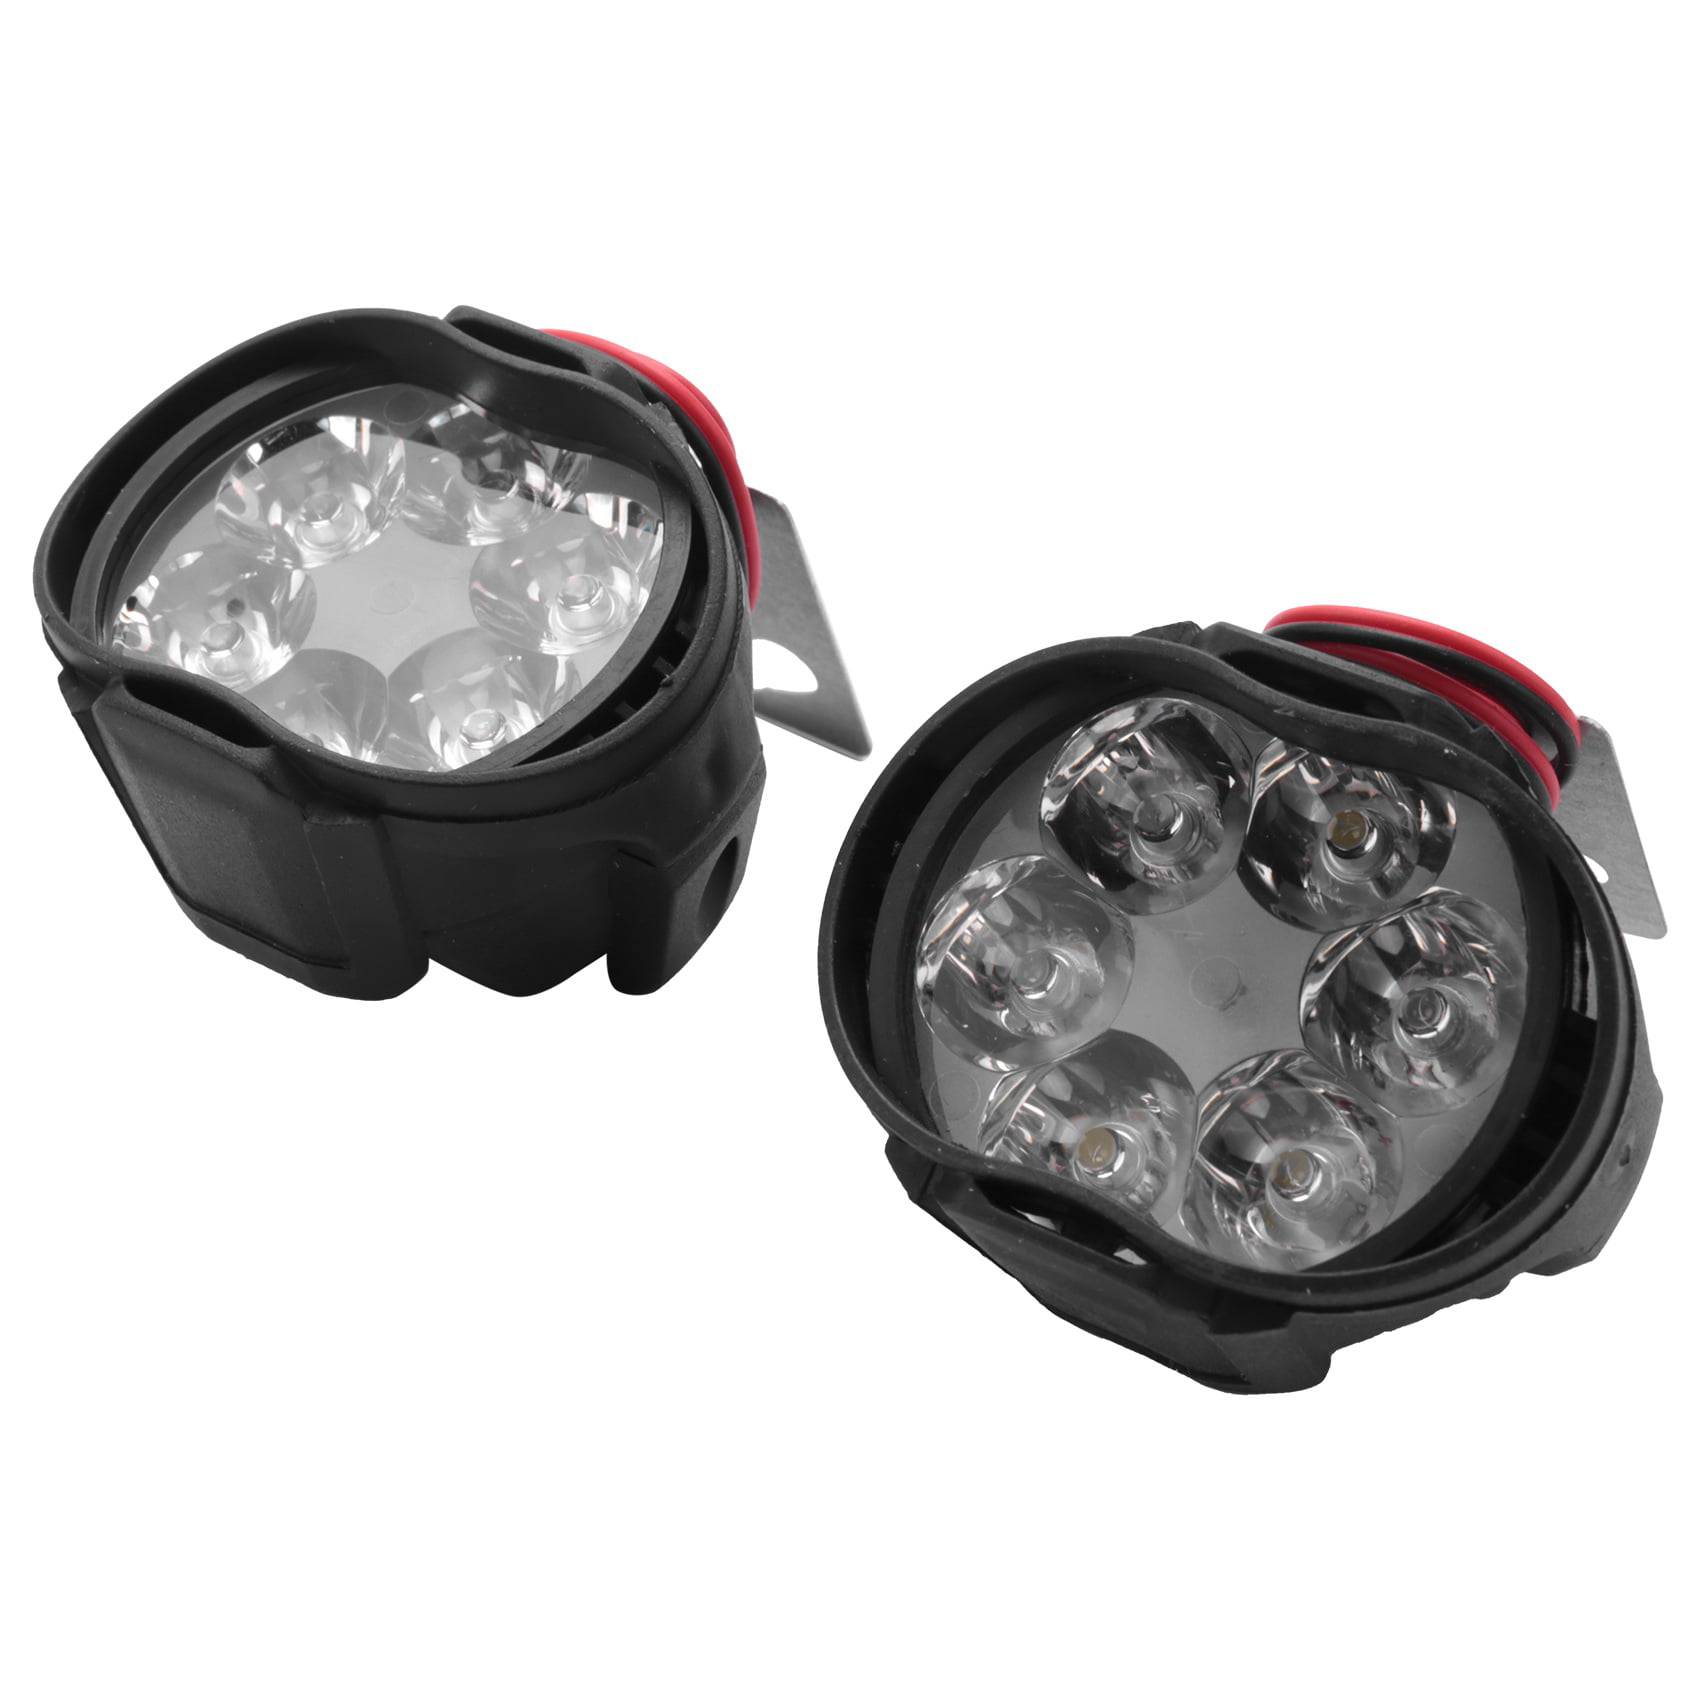 New 2 Pcs Car Motorcycle Waterproof LED External Lights Fog Light Headlight Lamp 